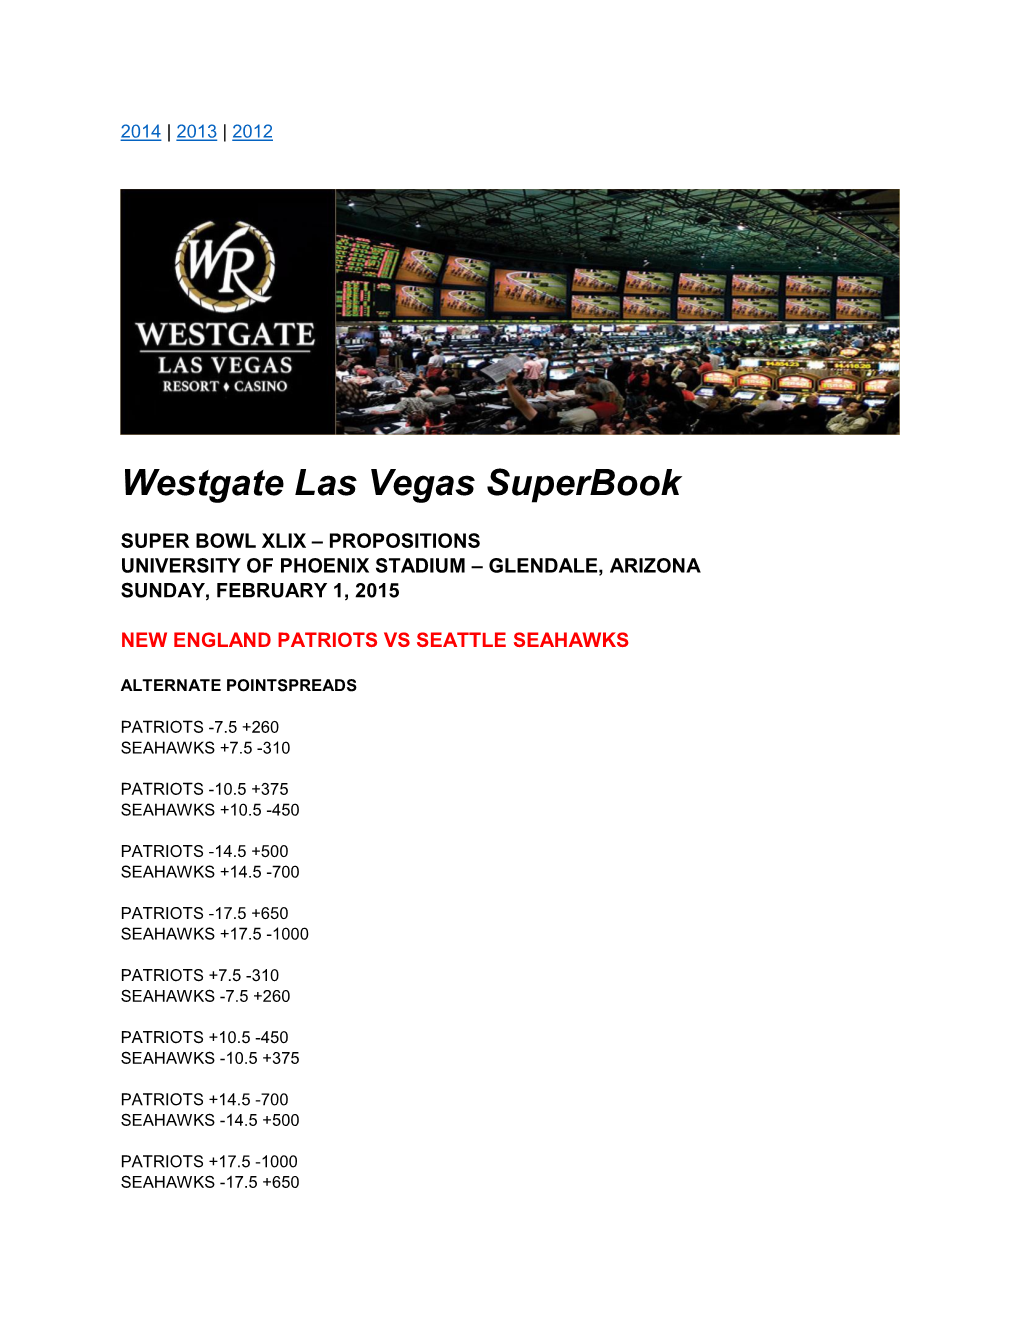 Westgate Las Vegas Superbook